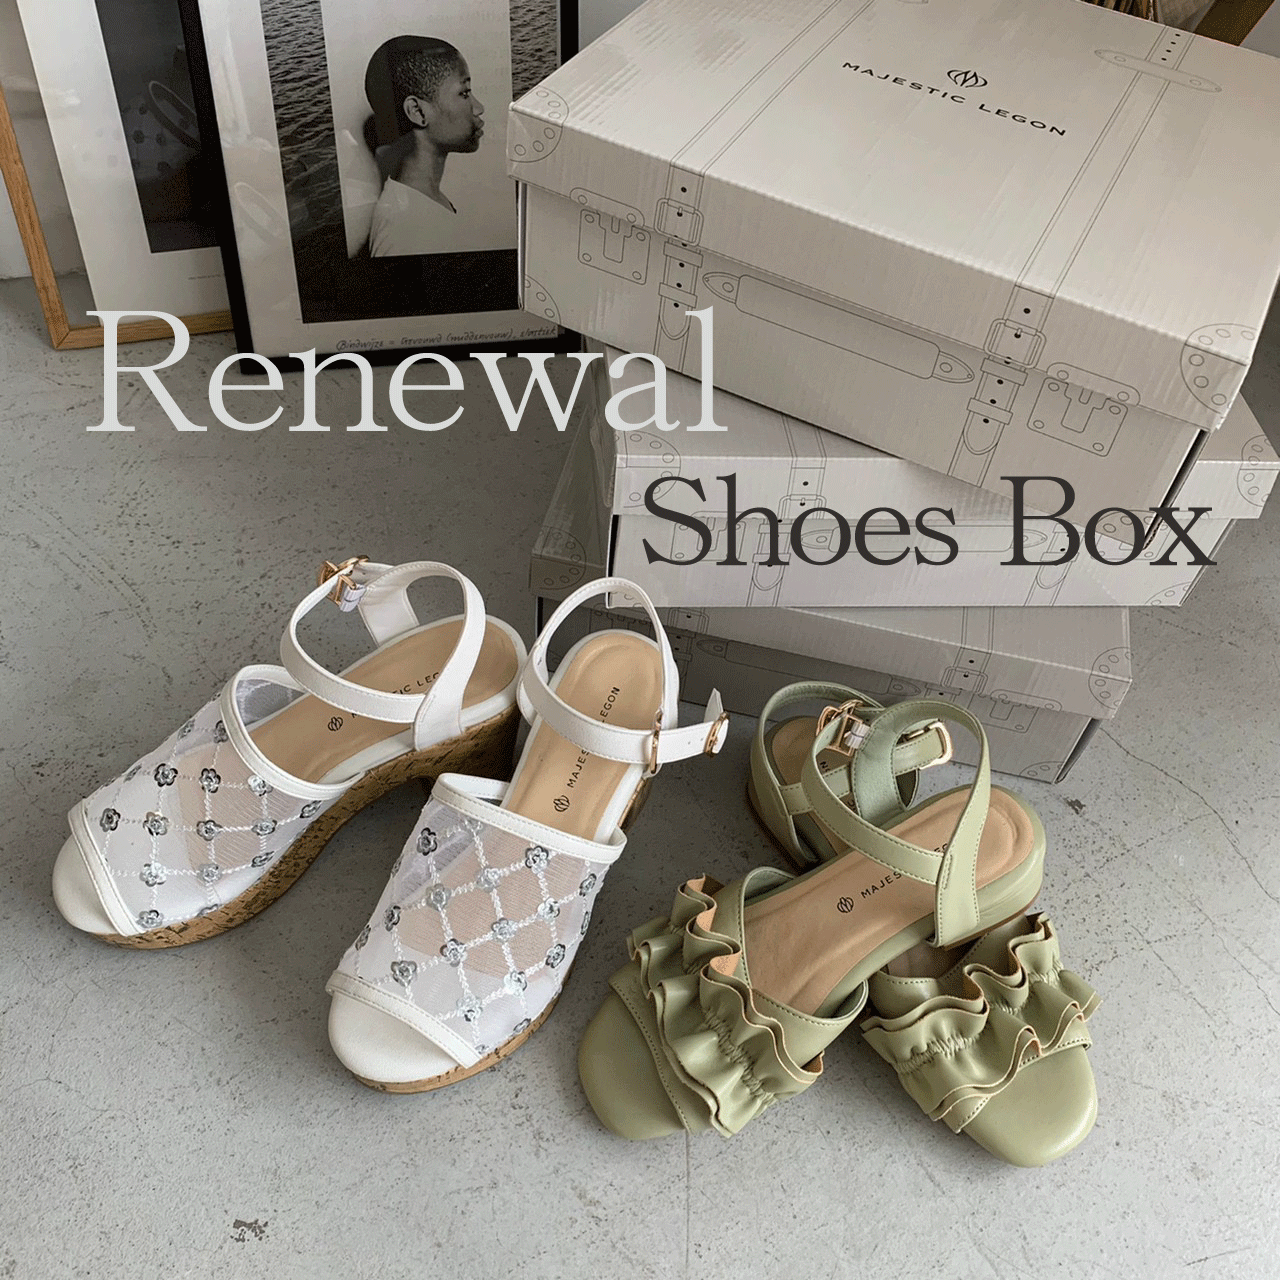 ♥ Shoes Box Renewal ♥